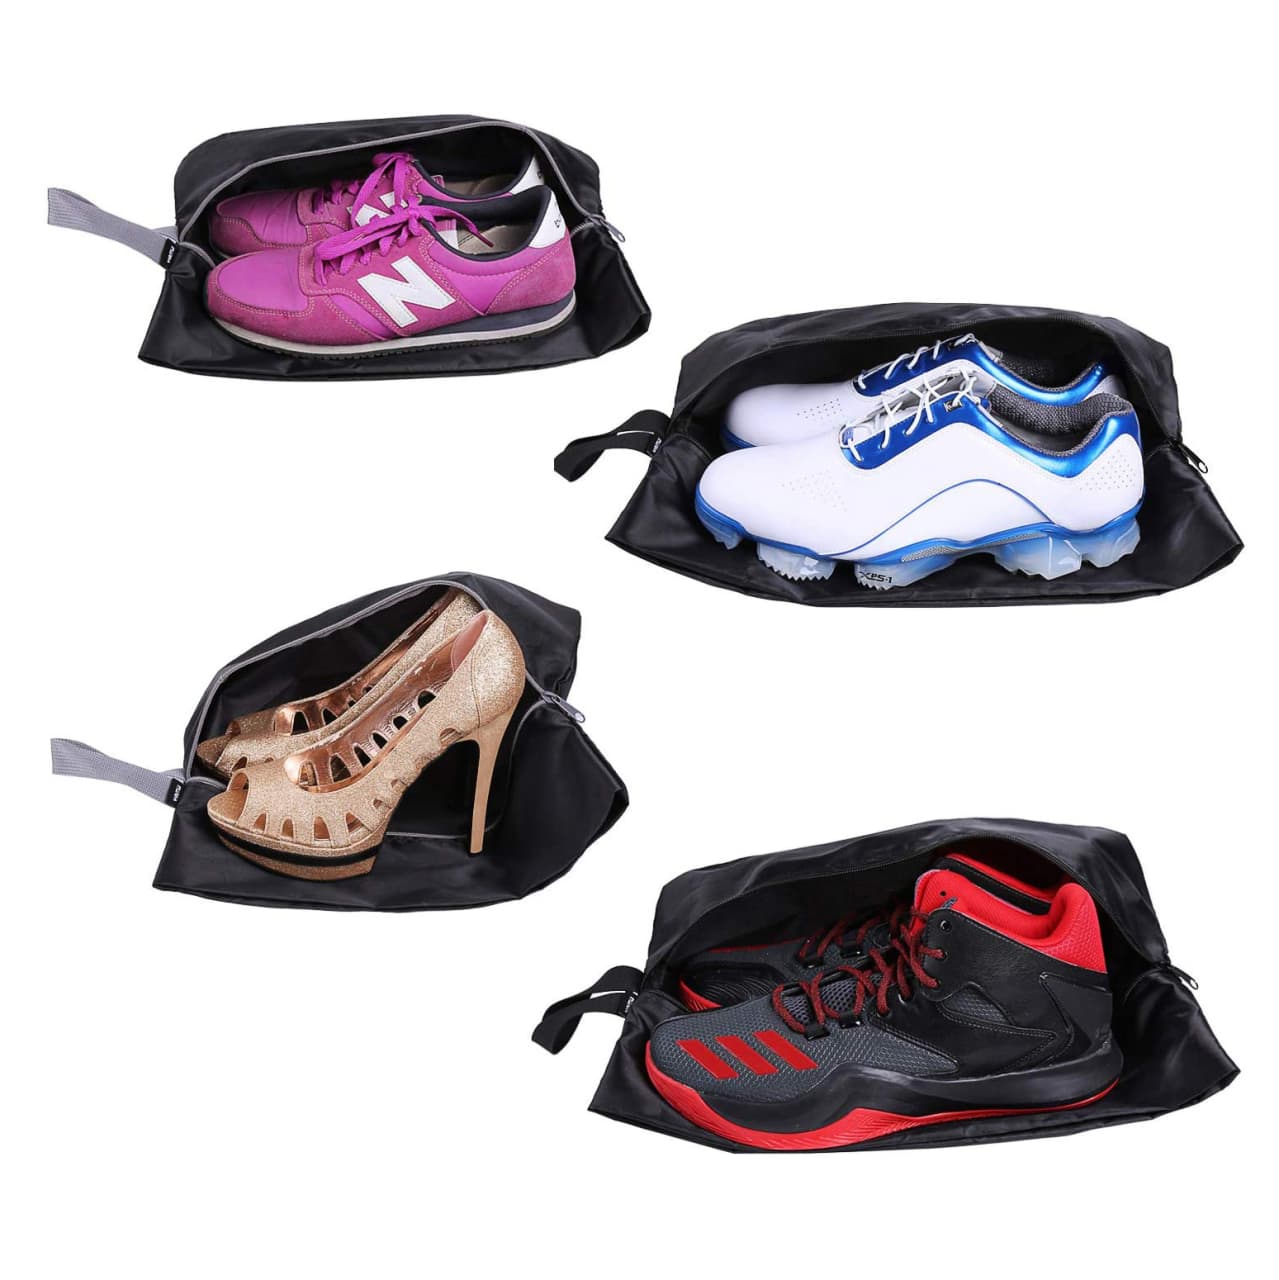 Travel Shoe Bags (Set of 4)